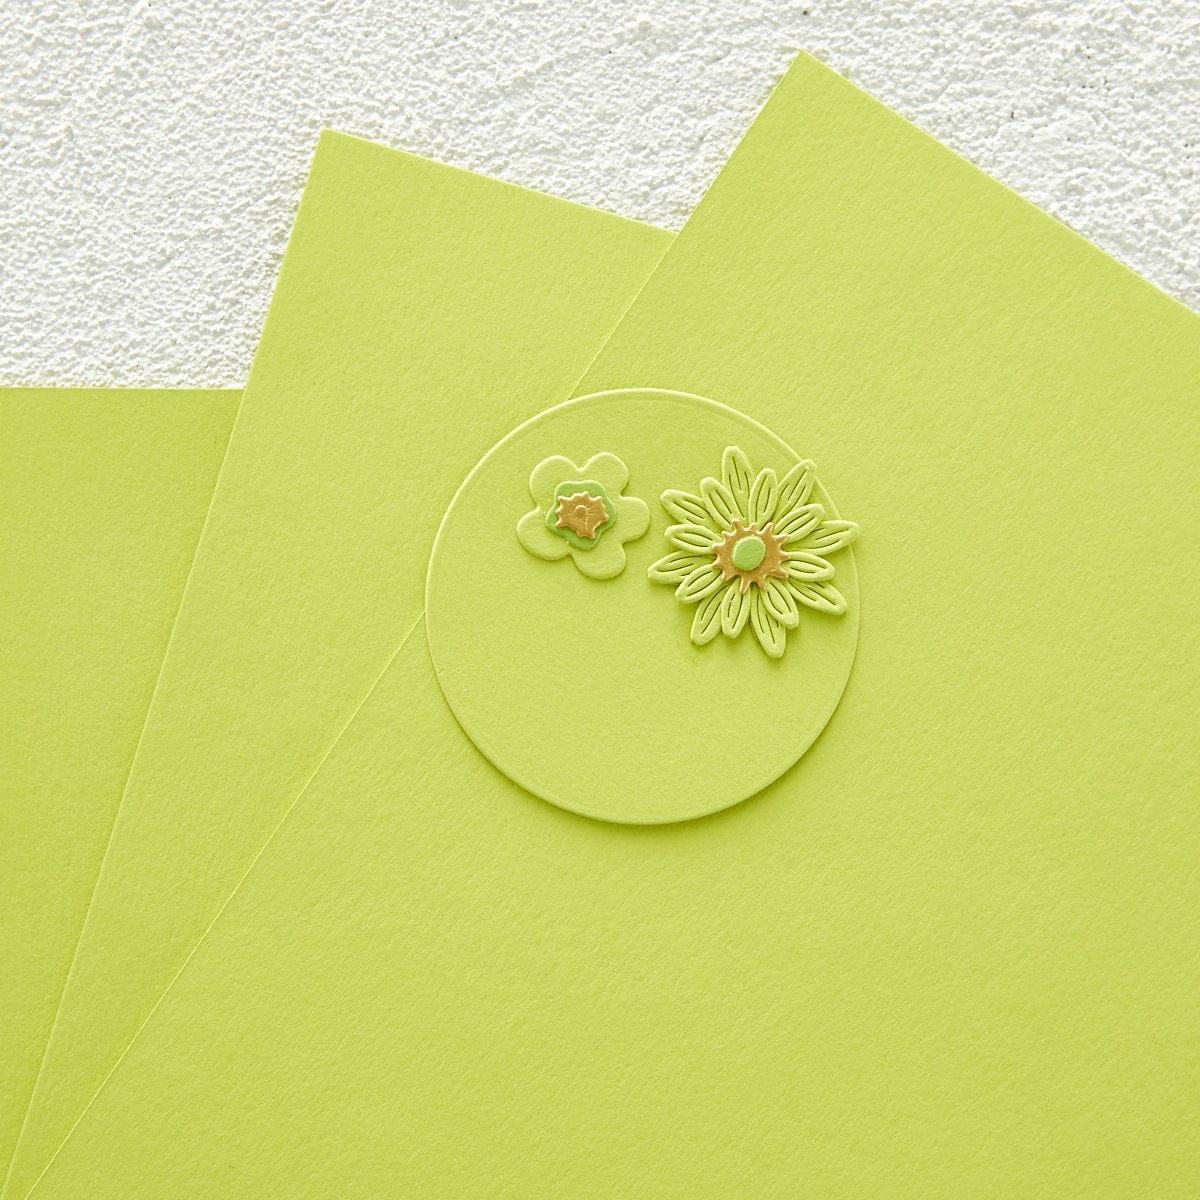 Jewel Tone Assorted Glitter Cardstock 8.5 x 11 - 10 Sheets - Spellbinders  Paper Arts